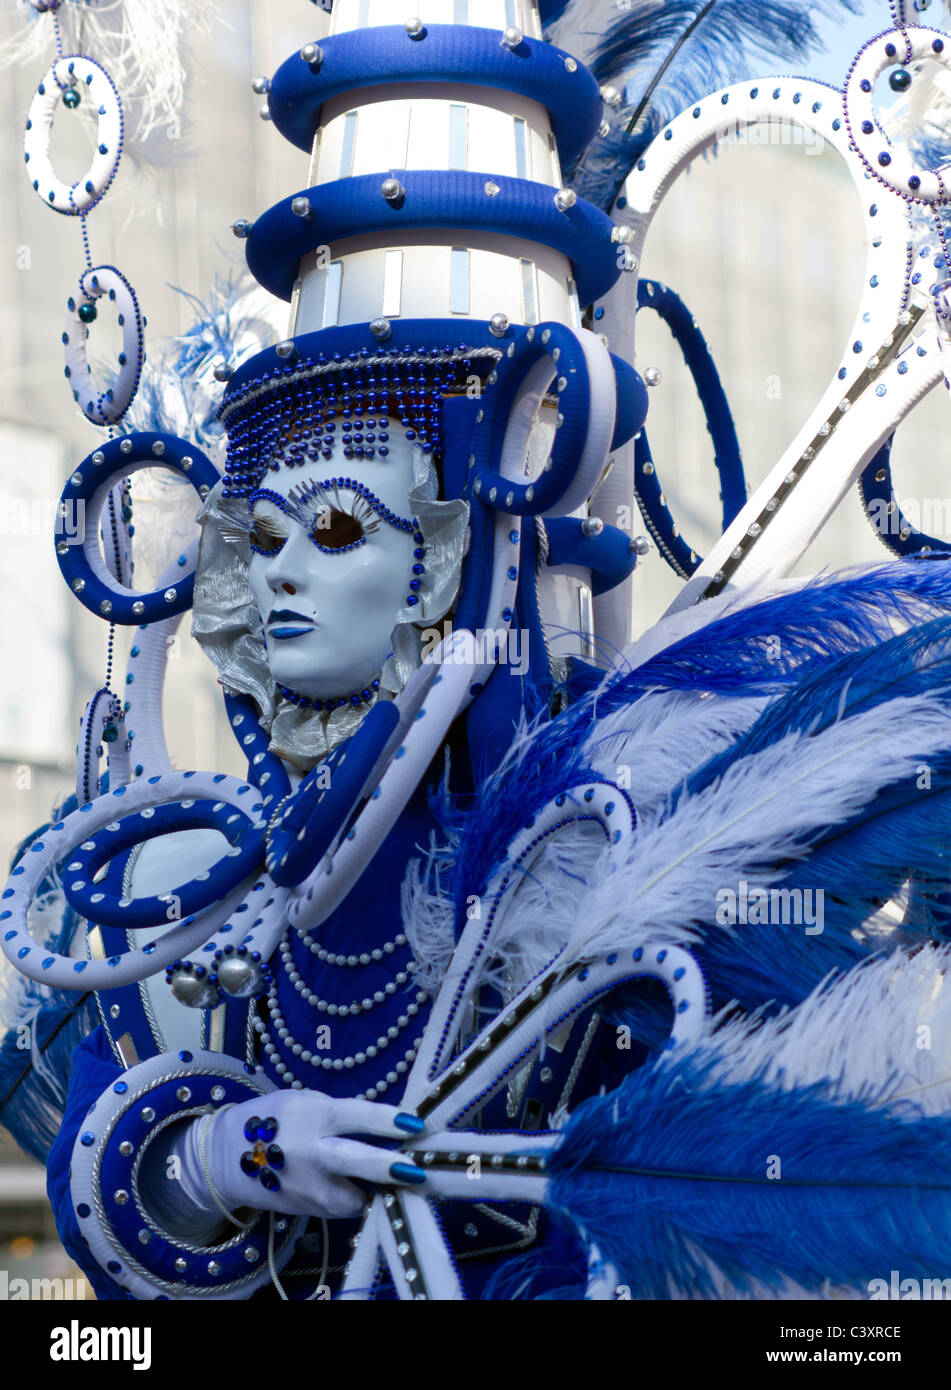 Elaborate costume at carnival Stock Photo